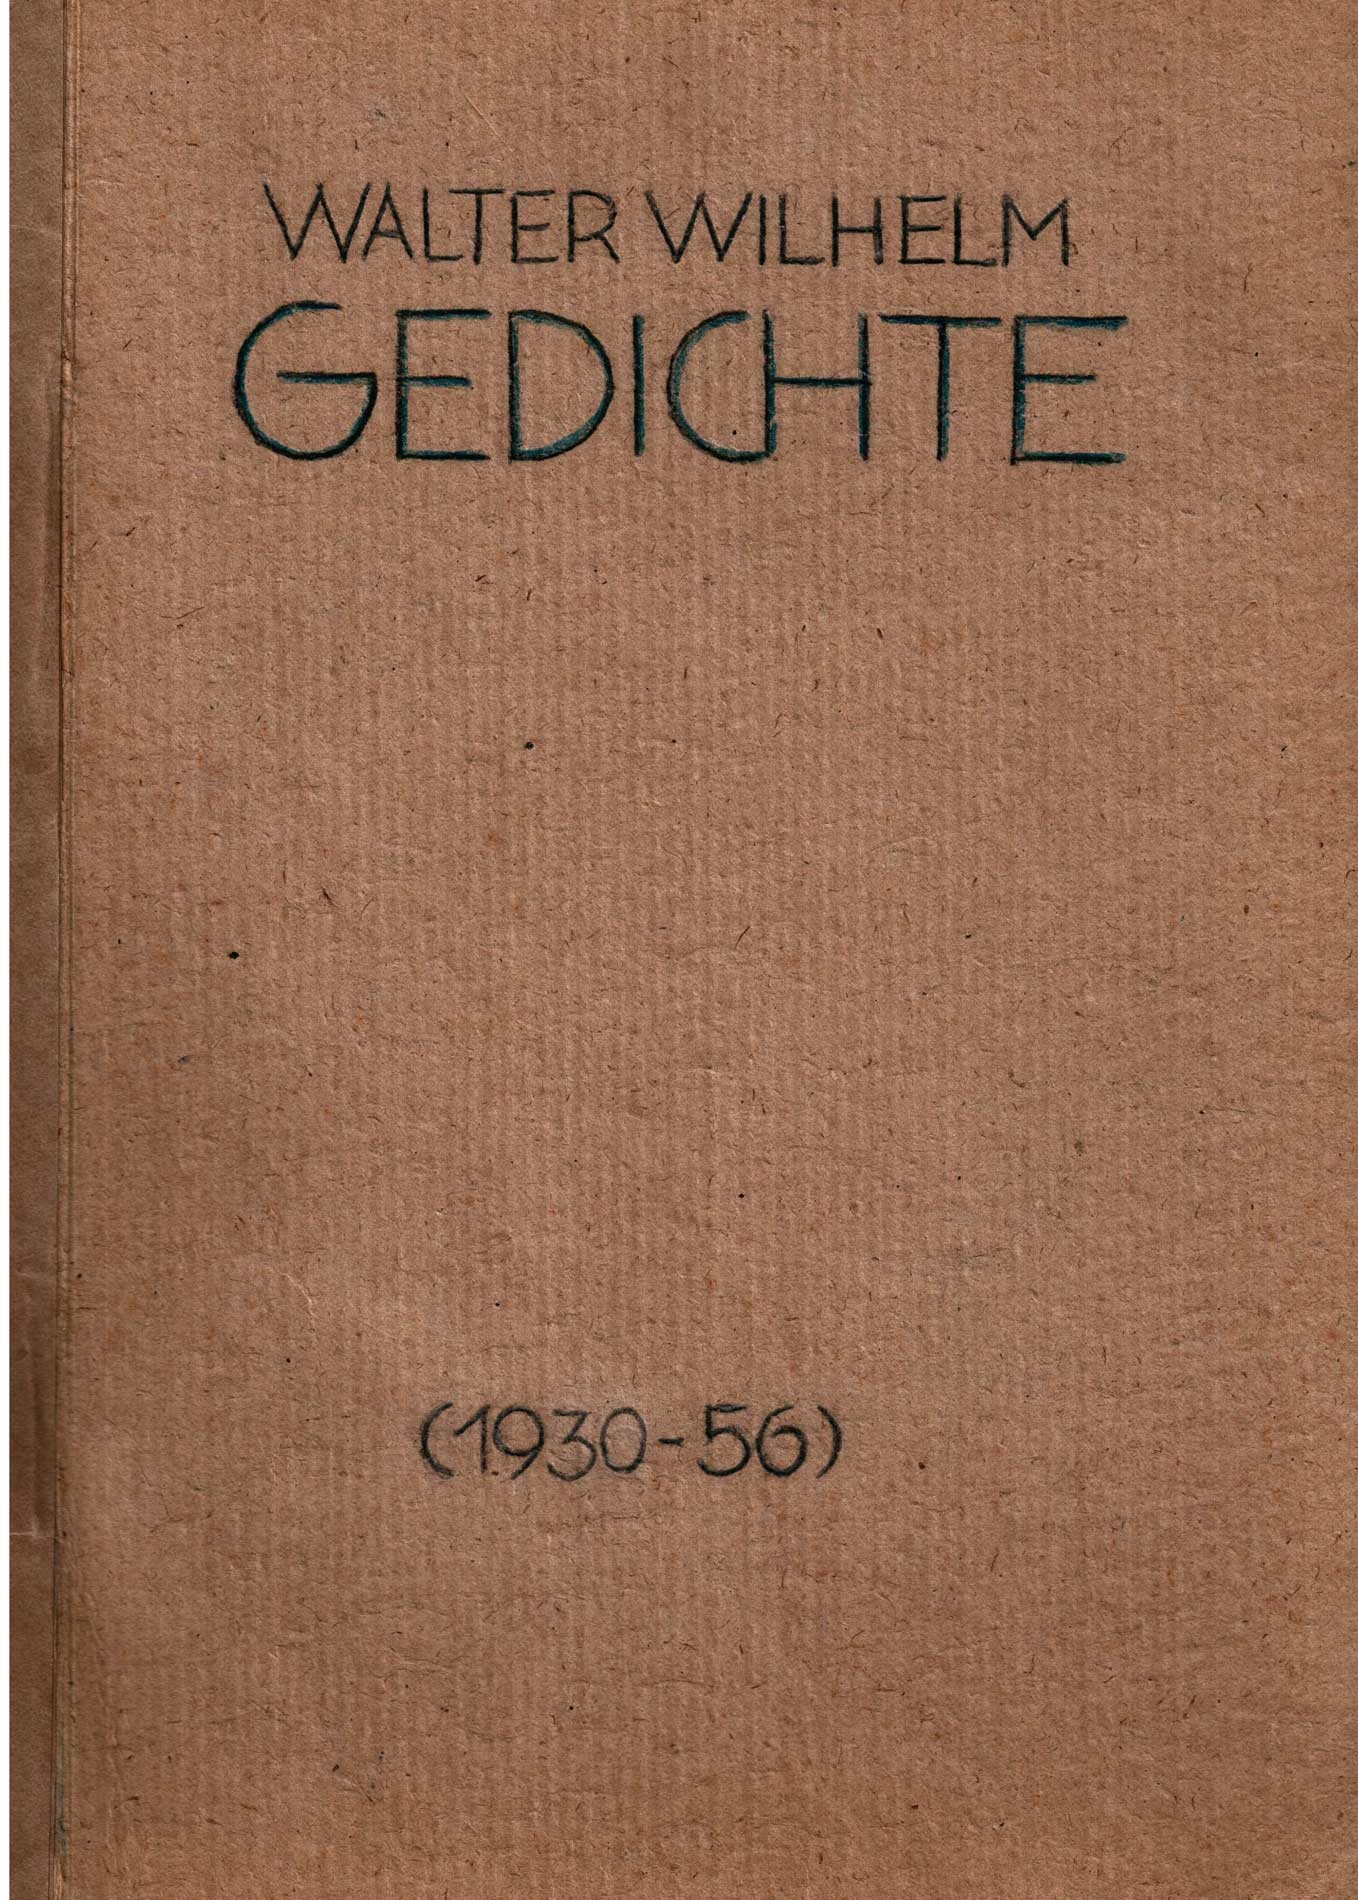 Walter Wilhelm. Gedichte (1930-56) (Winckelmann-Museum Stendal CC BY-NC-SA)